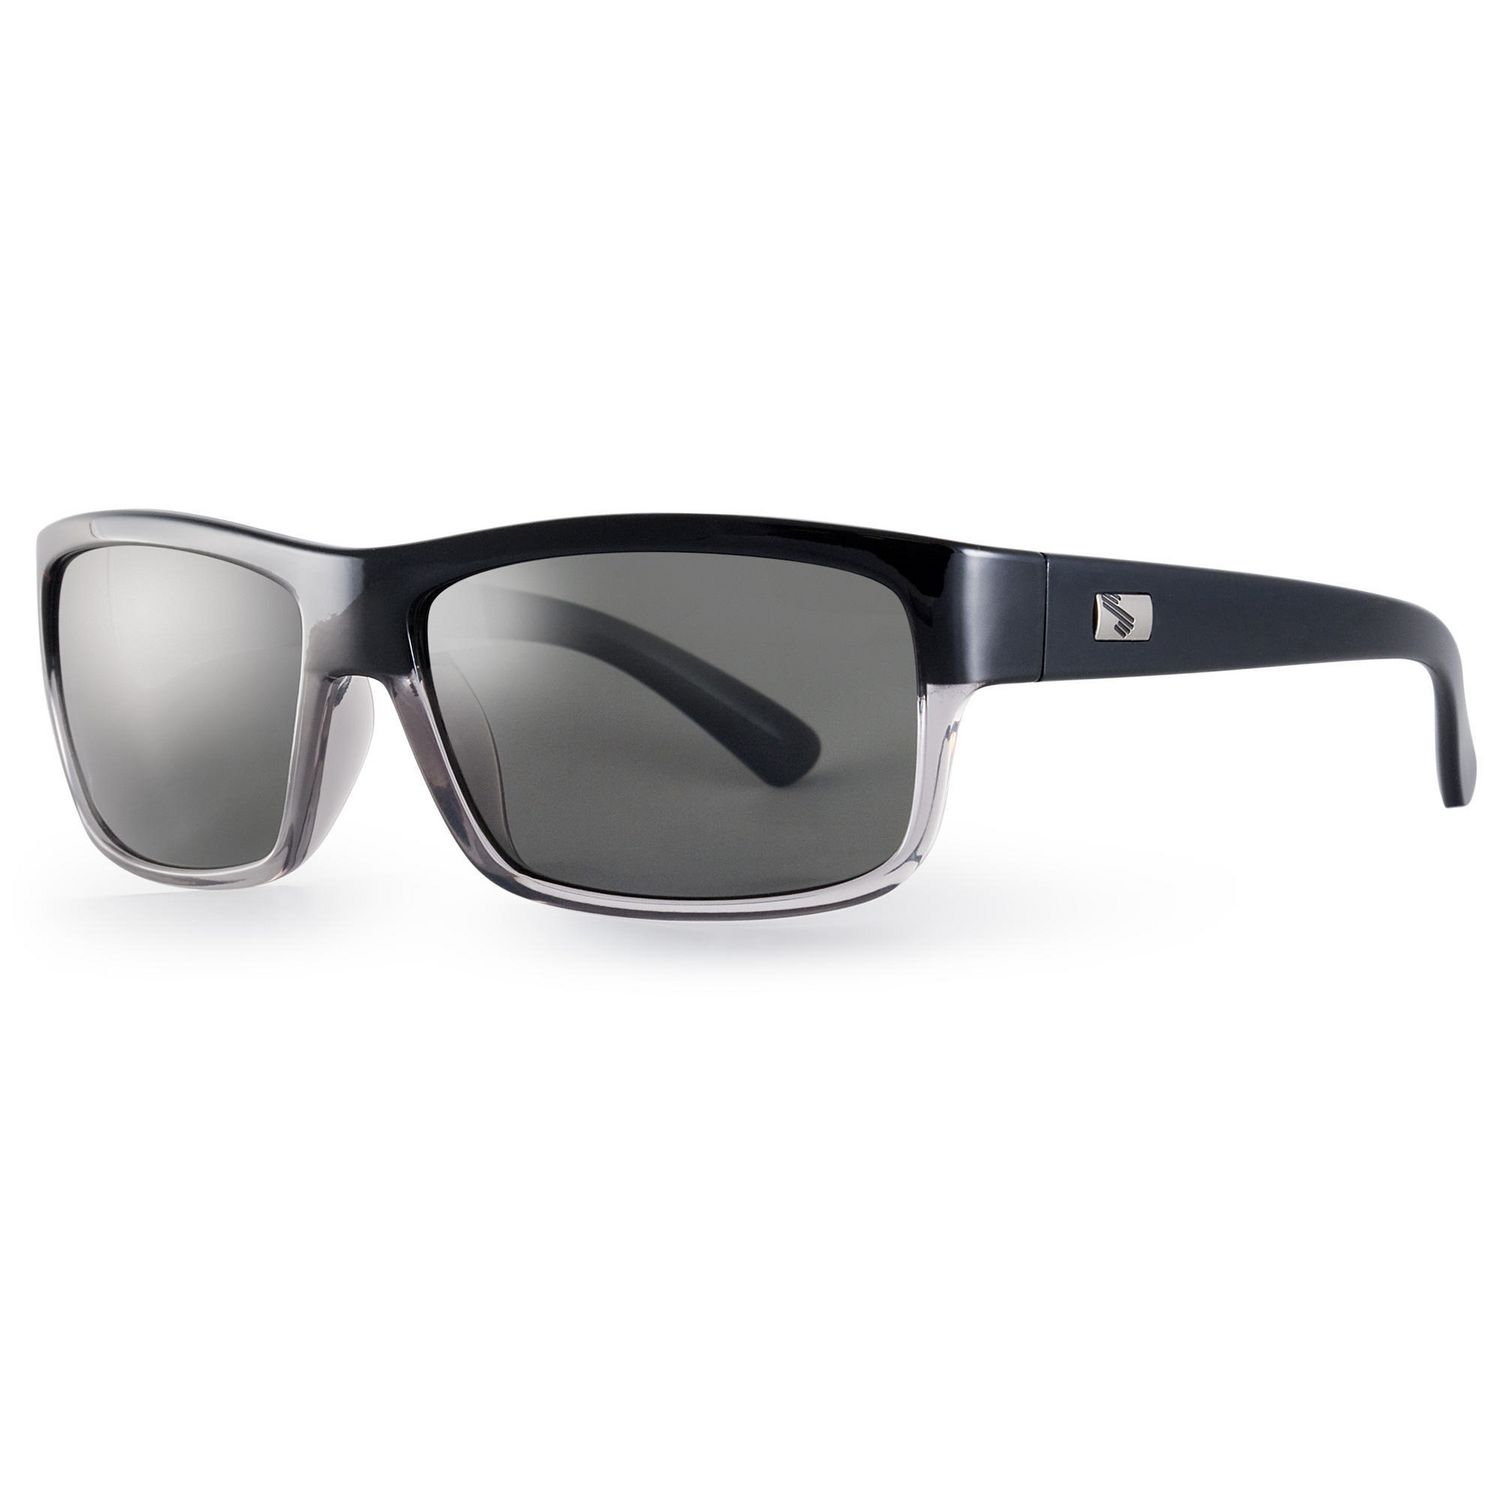 Sundog Eyewear Sunglasses - Connoisseur Black | Walmart Canada